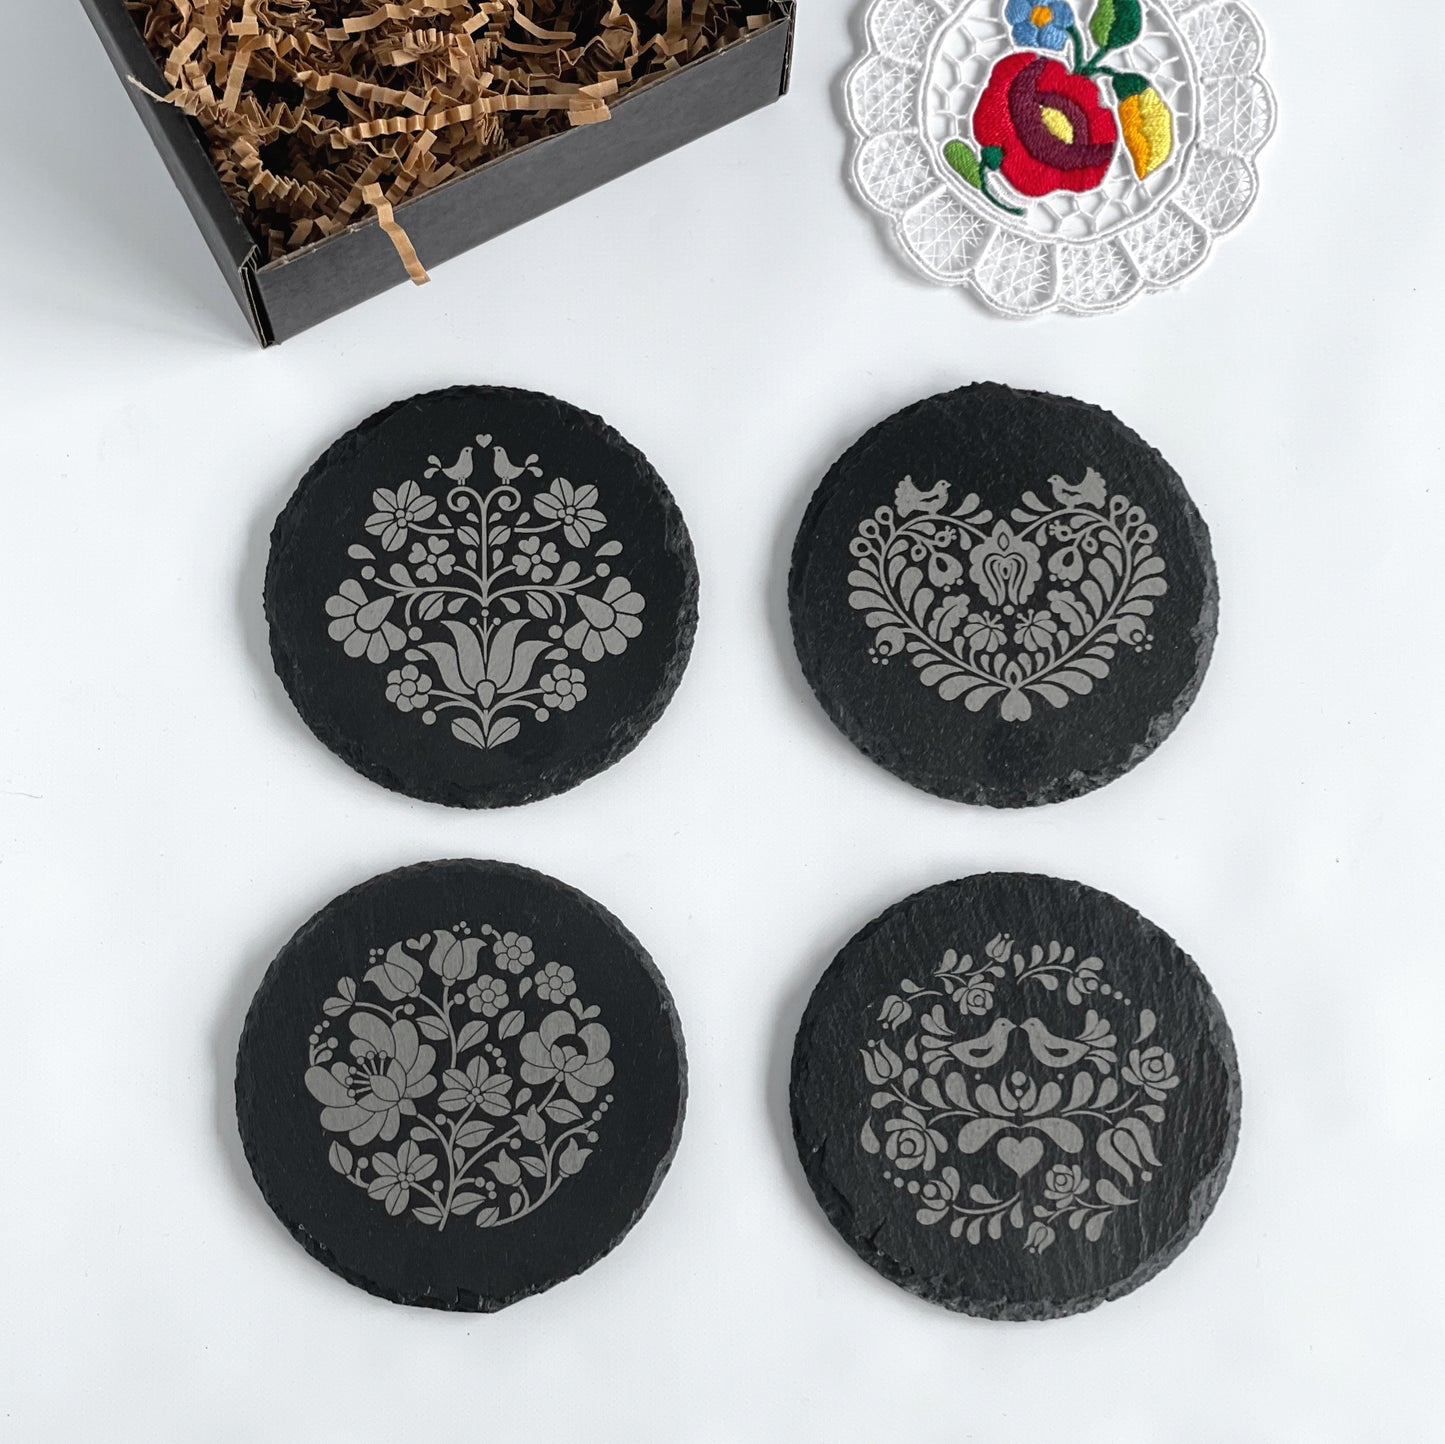 Laser engraved round slate coaster set with beautiful Hungarian folk motifs